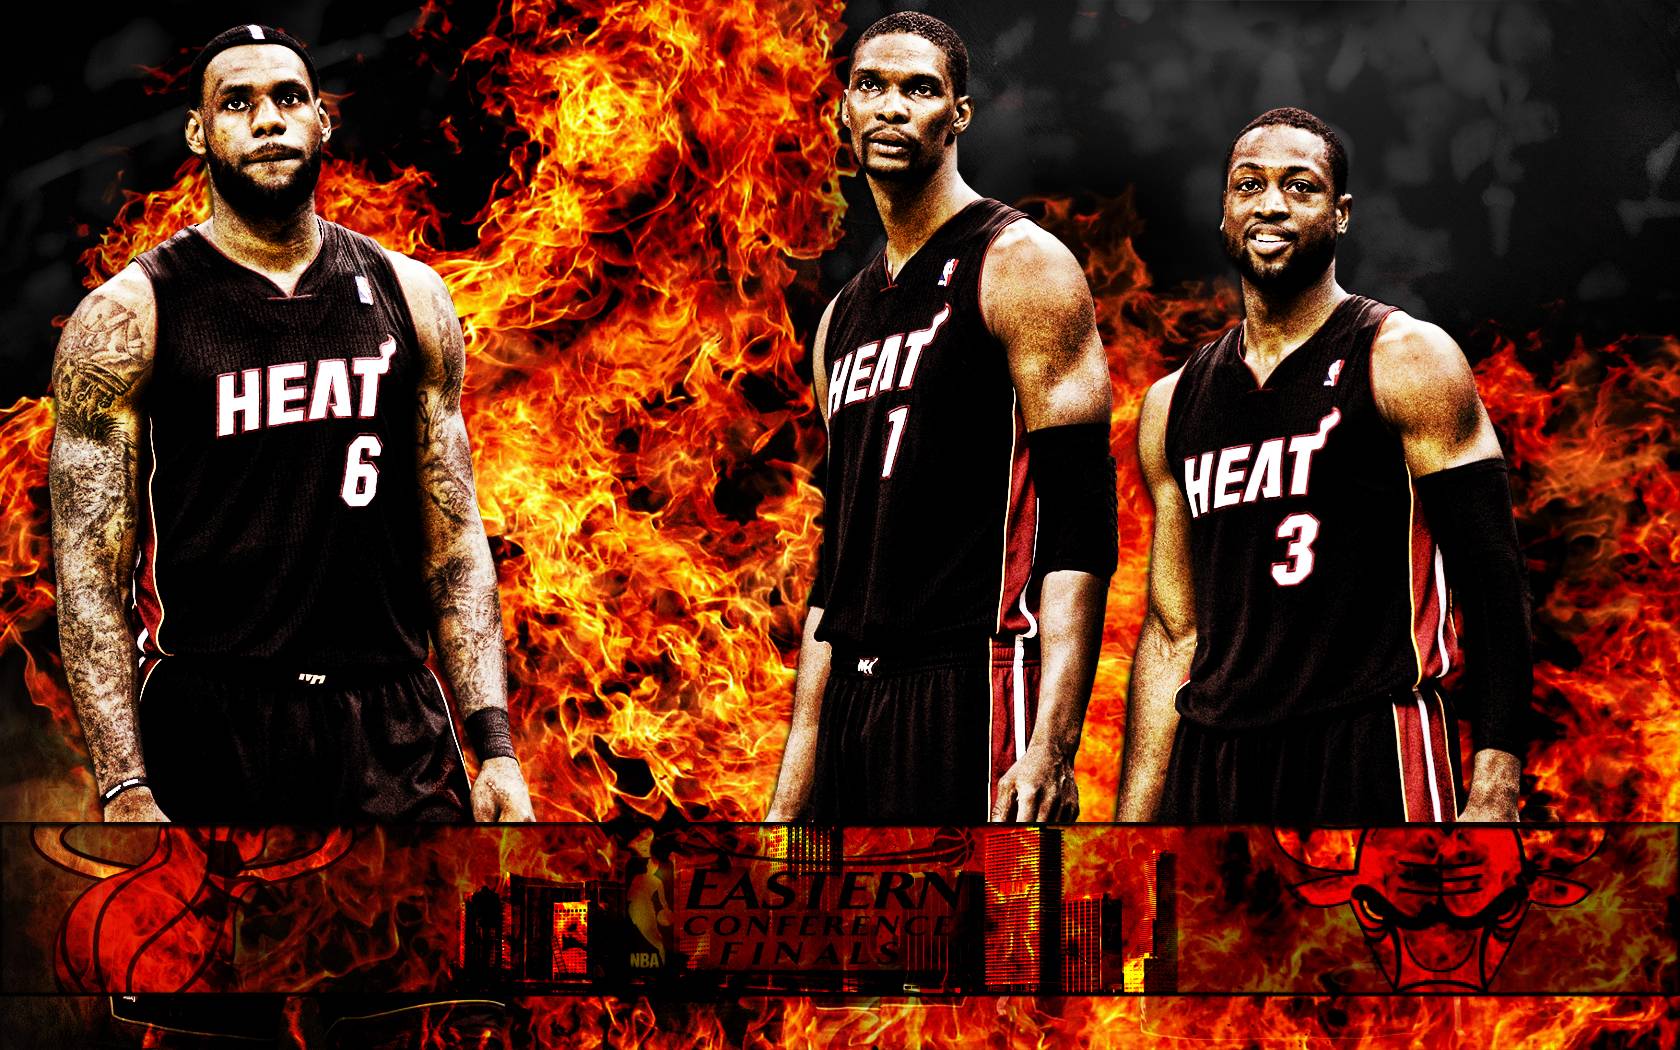 Miami Heat Background 2015